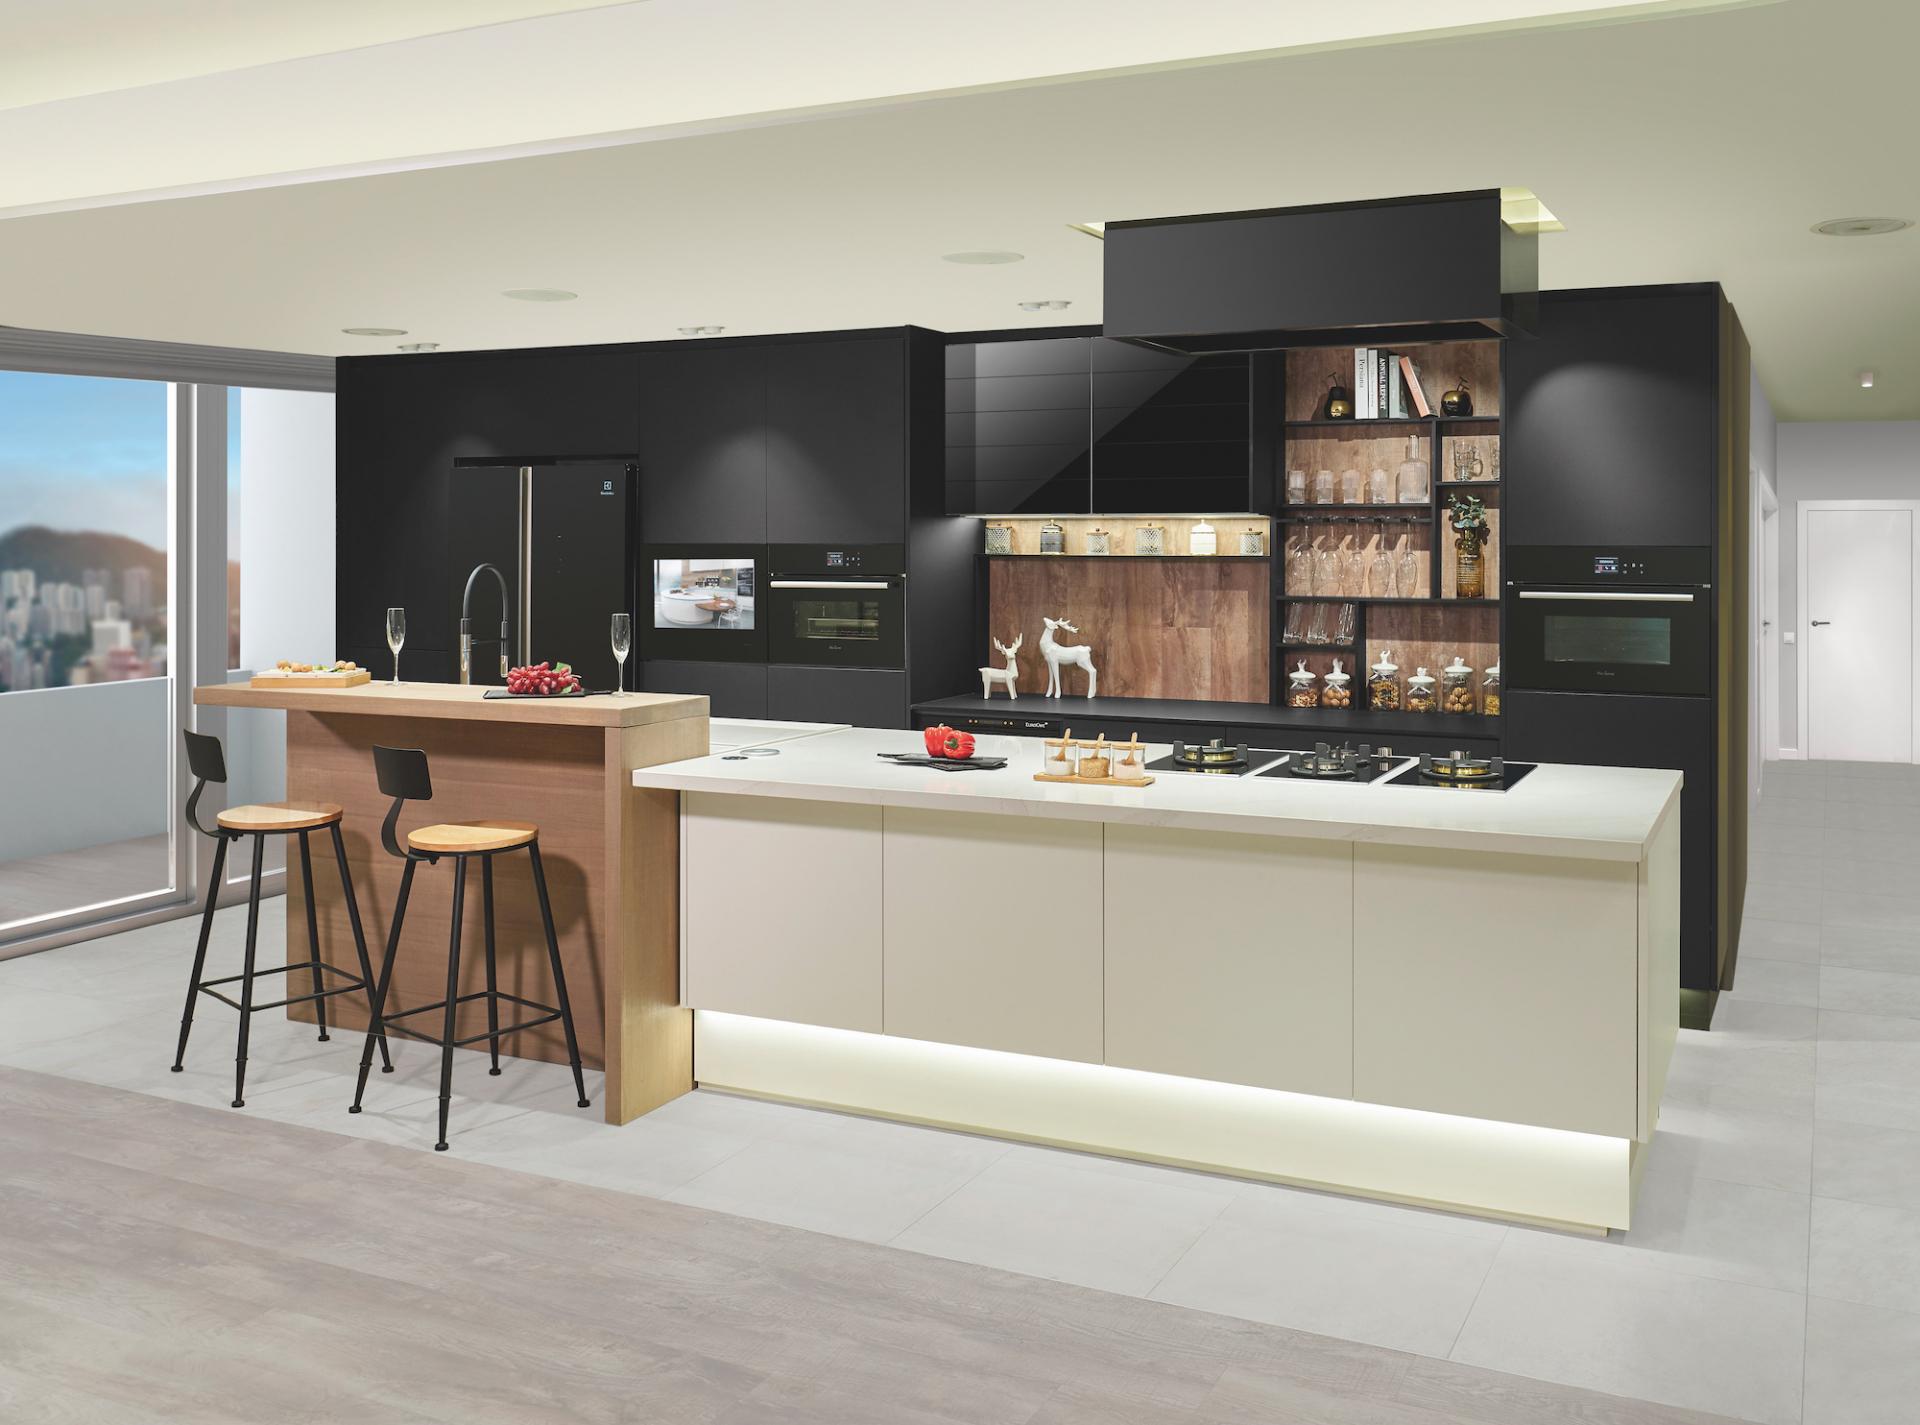 Interior Designer Gary Lui on Why Mia Cucina is His Favourite Kitchen Cabinet Brand 